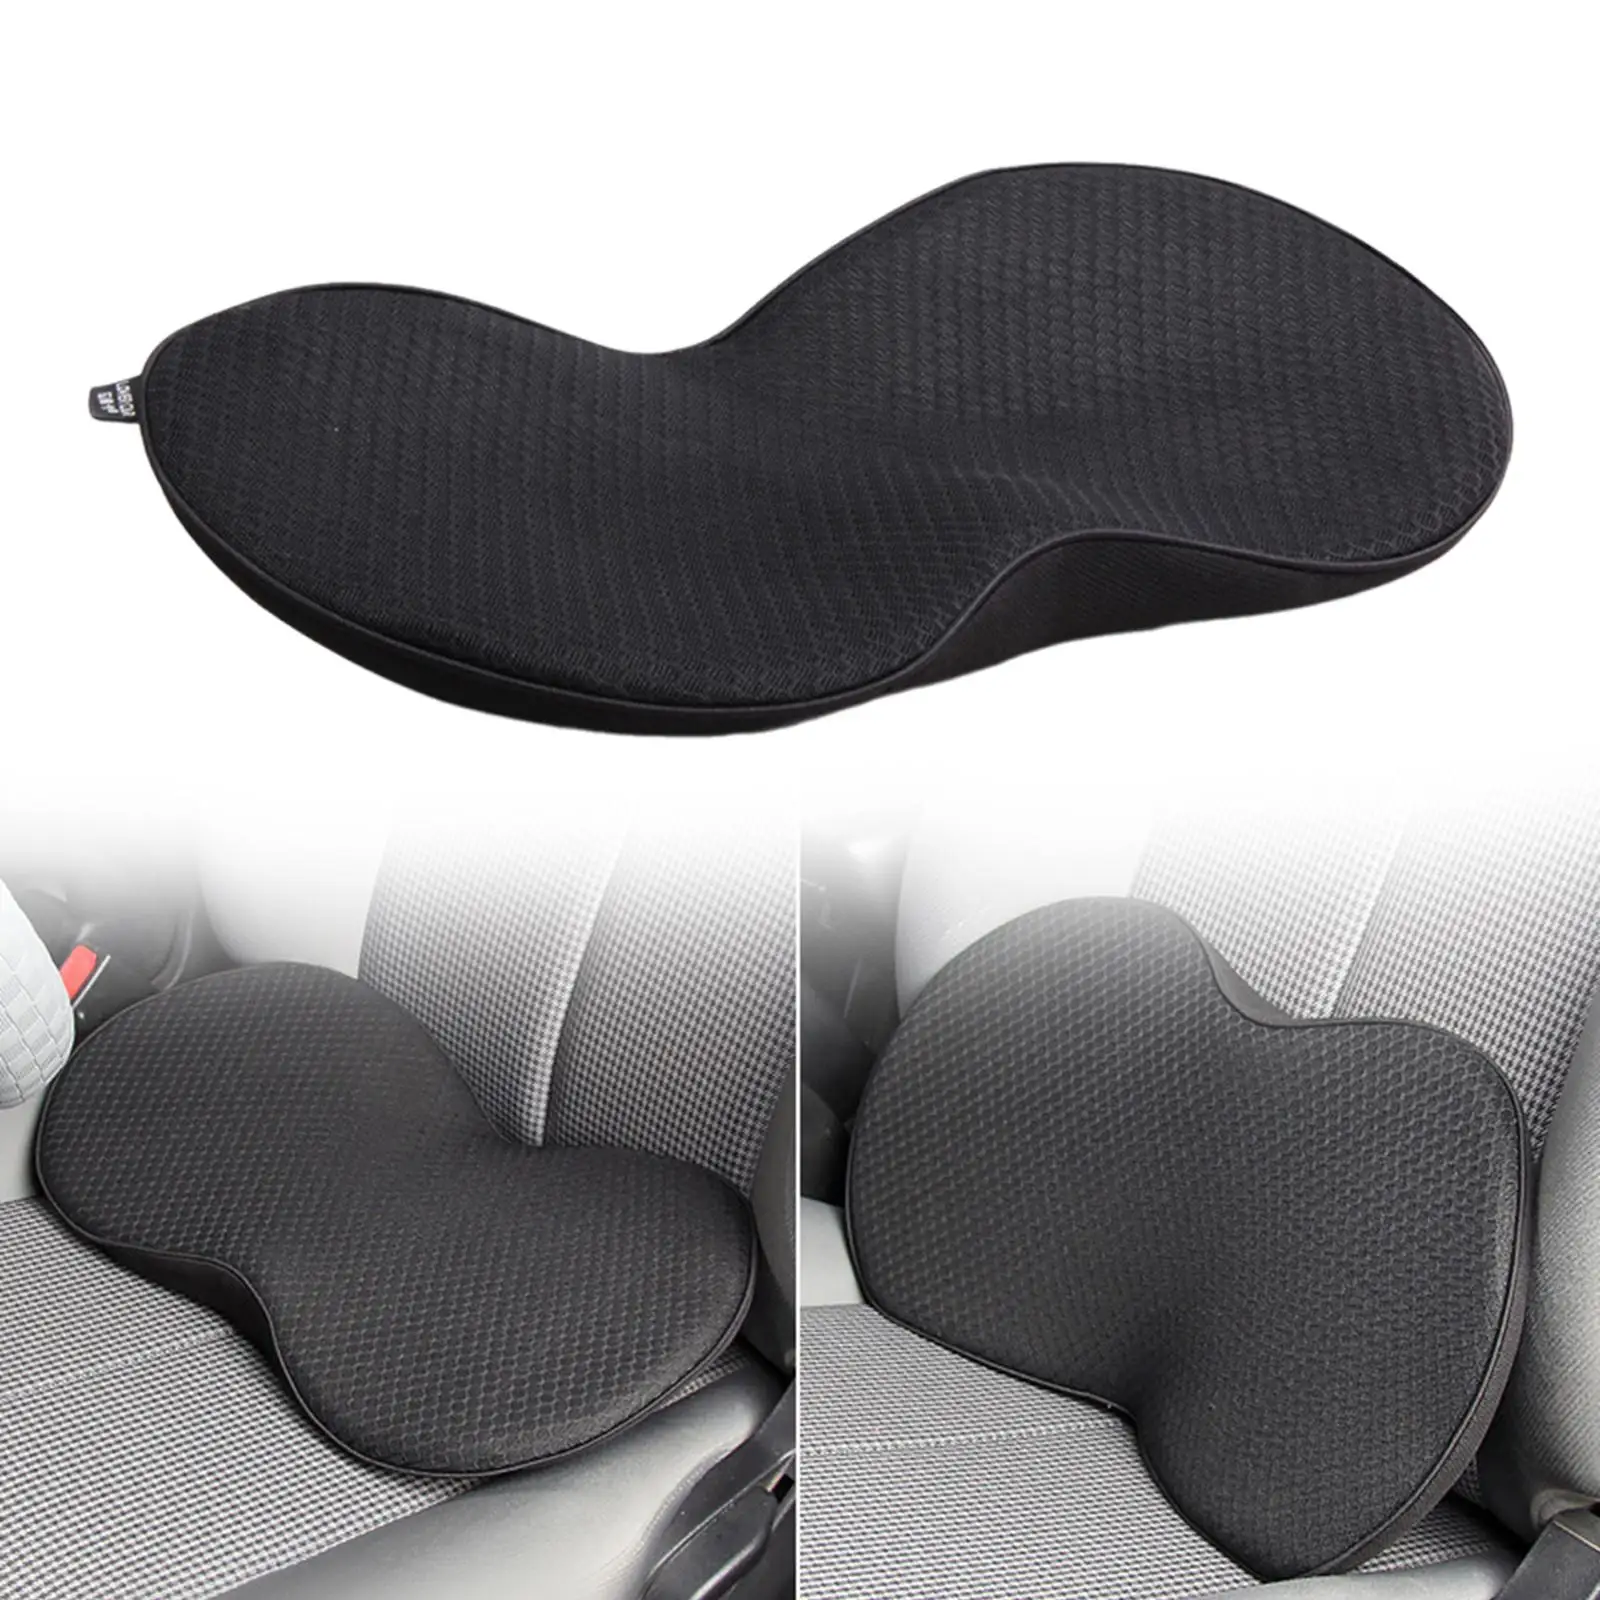 Generic Memory Foam Seat Cushion for Driving Comfort Ergonomic Car Seat Pad for Cars Airplane Bleacher Office Chair Trucks